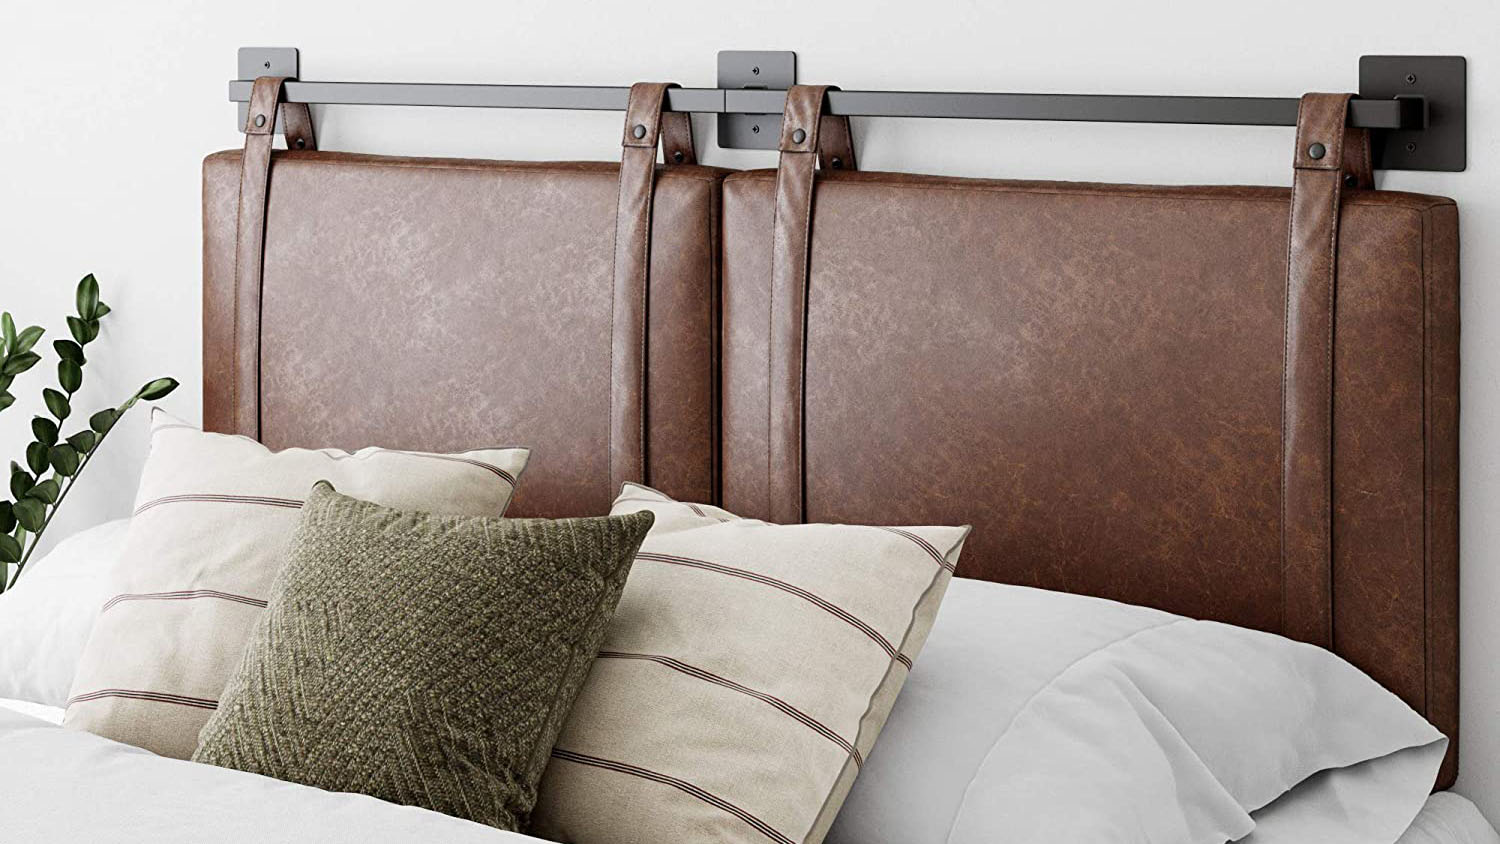 15 Best Headboards For Adjustable Beds, King Headboard For Tempurpedic Adjustable Bed